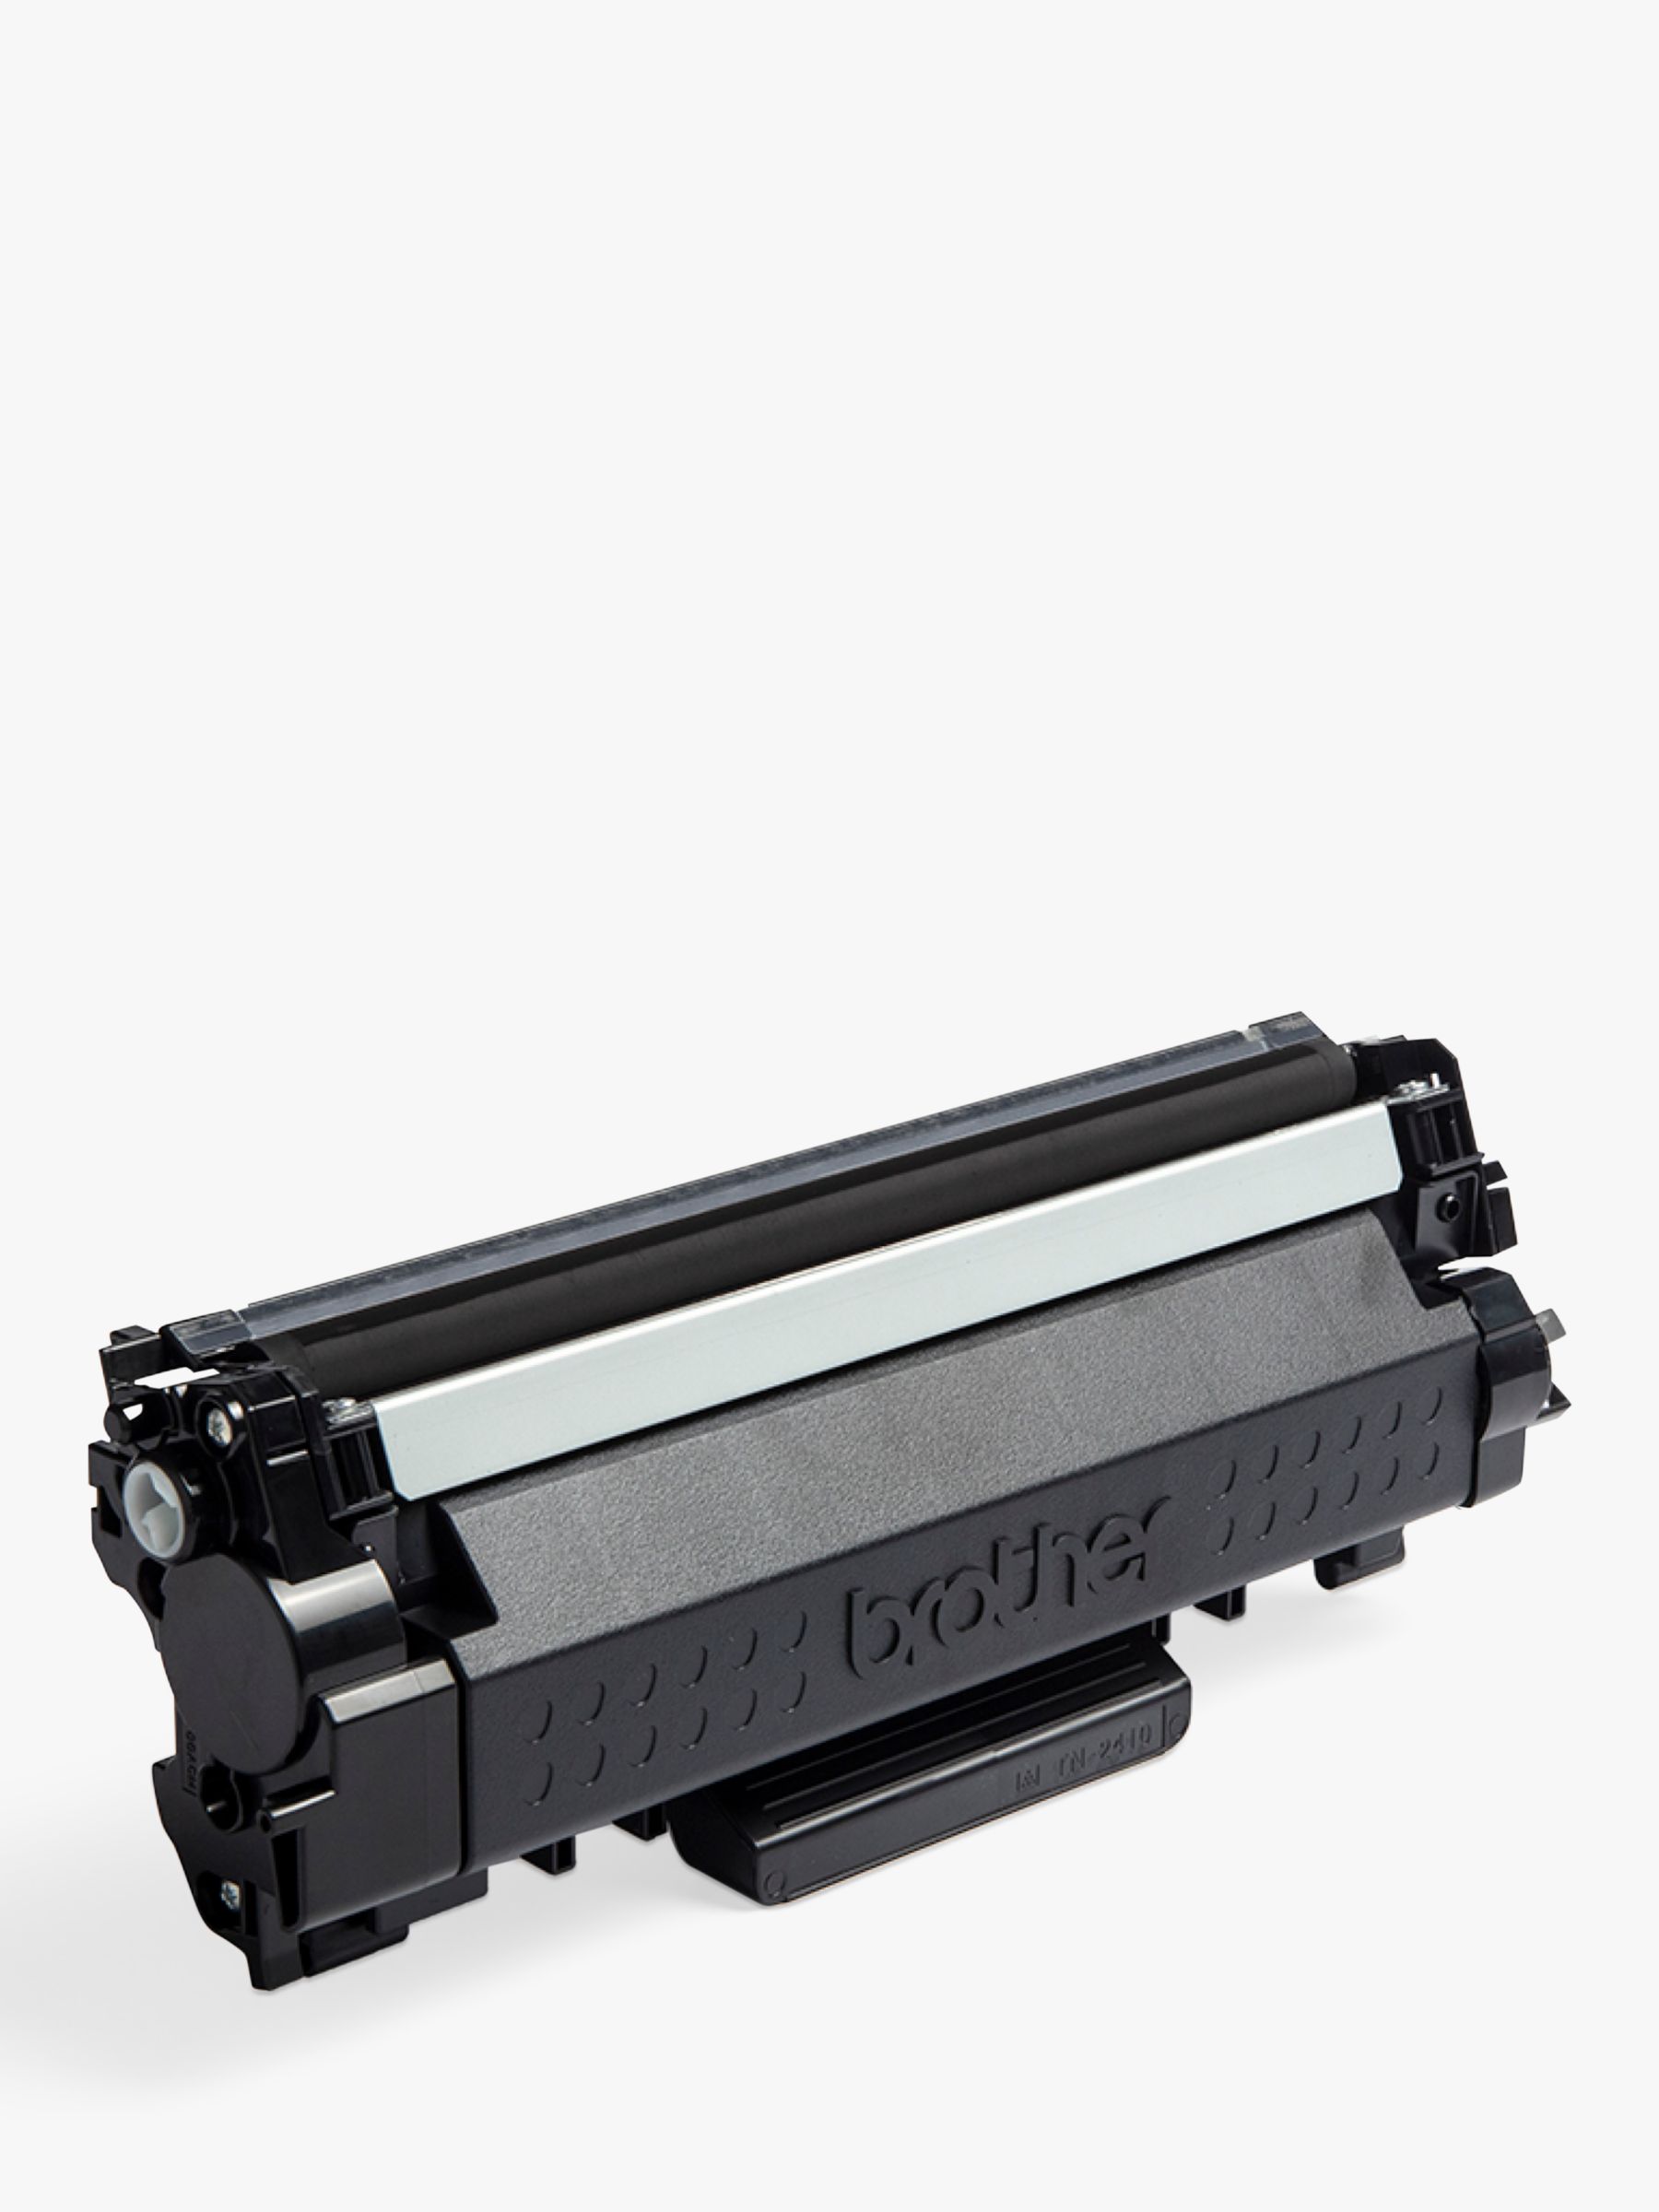 Value Compatible Brother TN-2410 Black Toner Cartridge (TN2410)